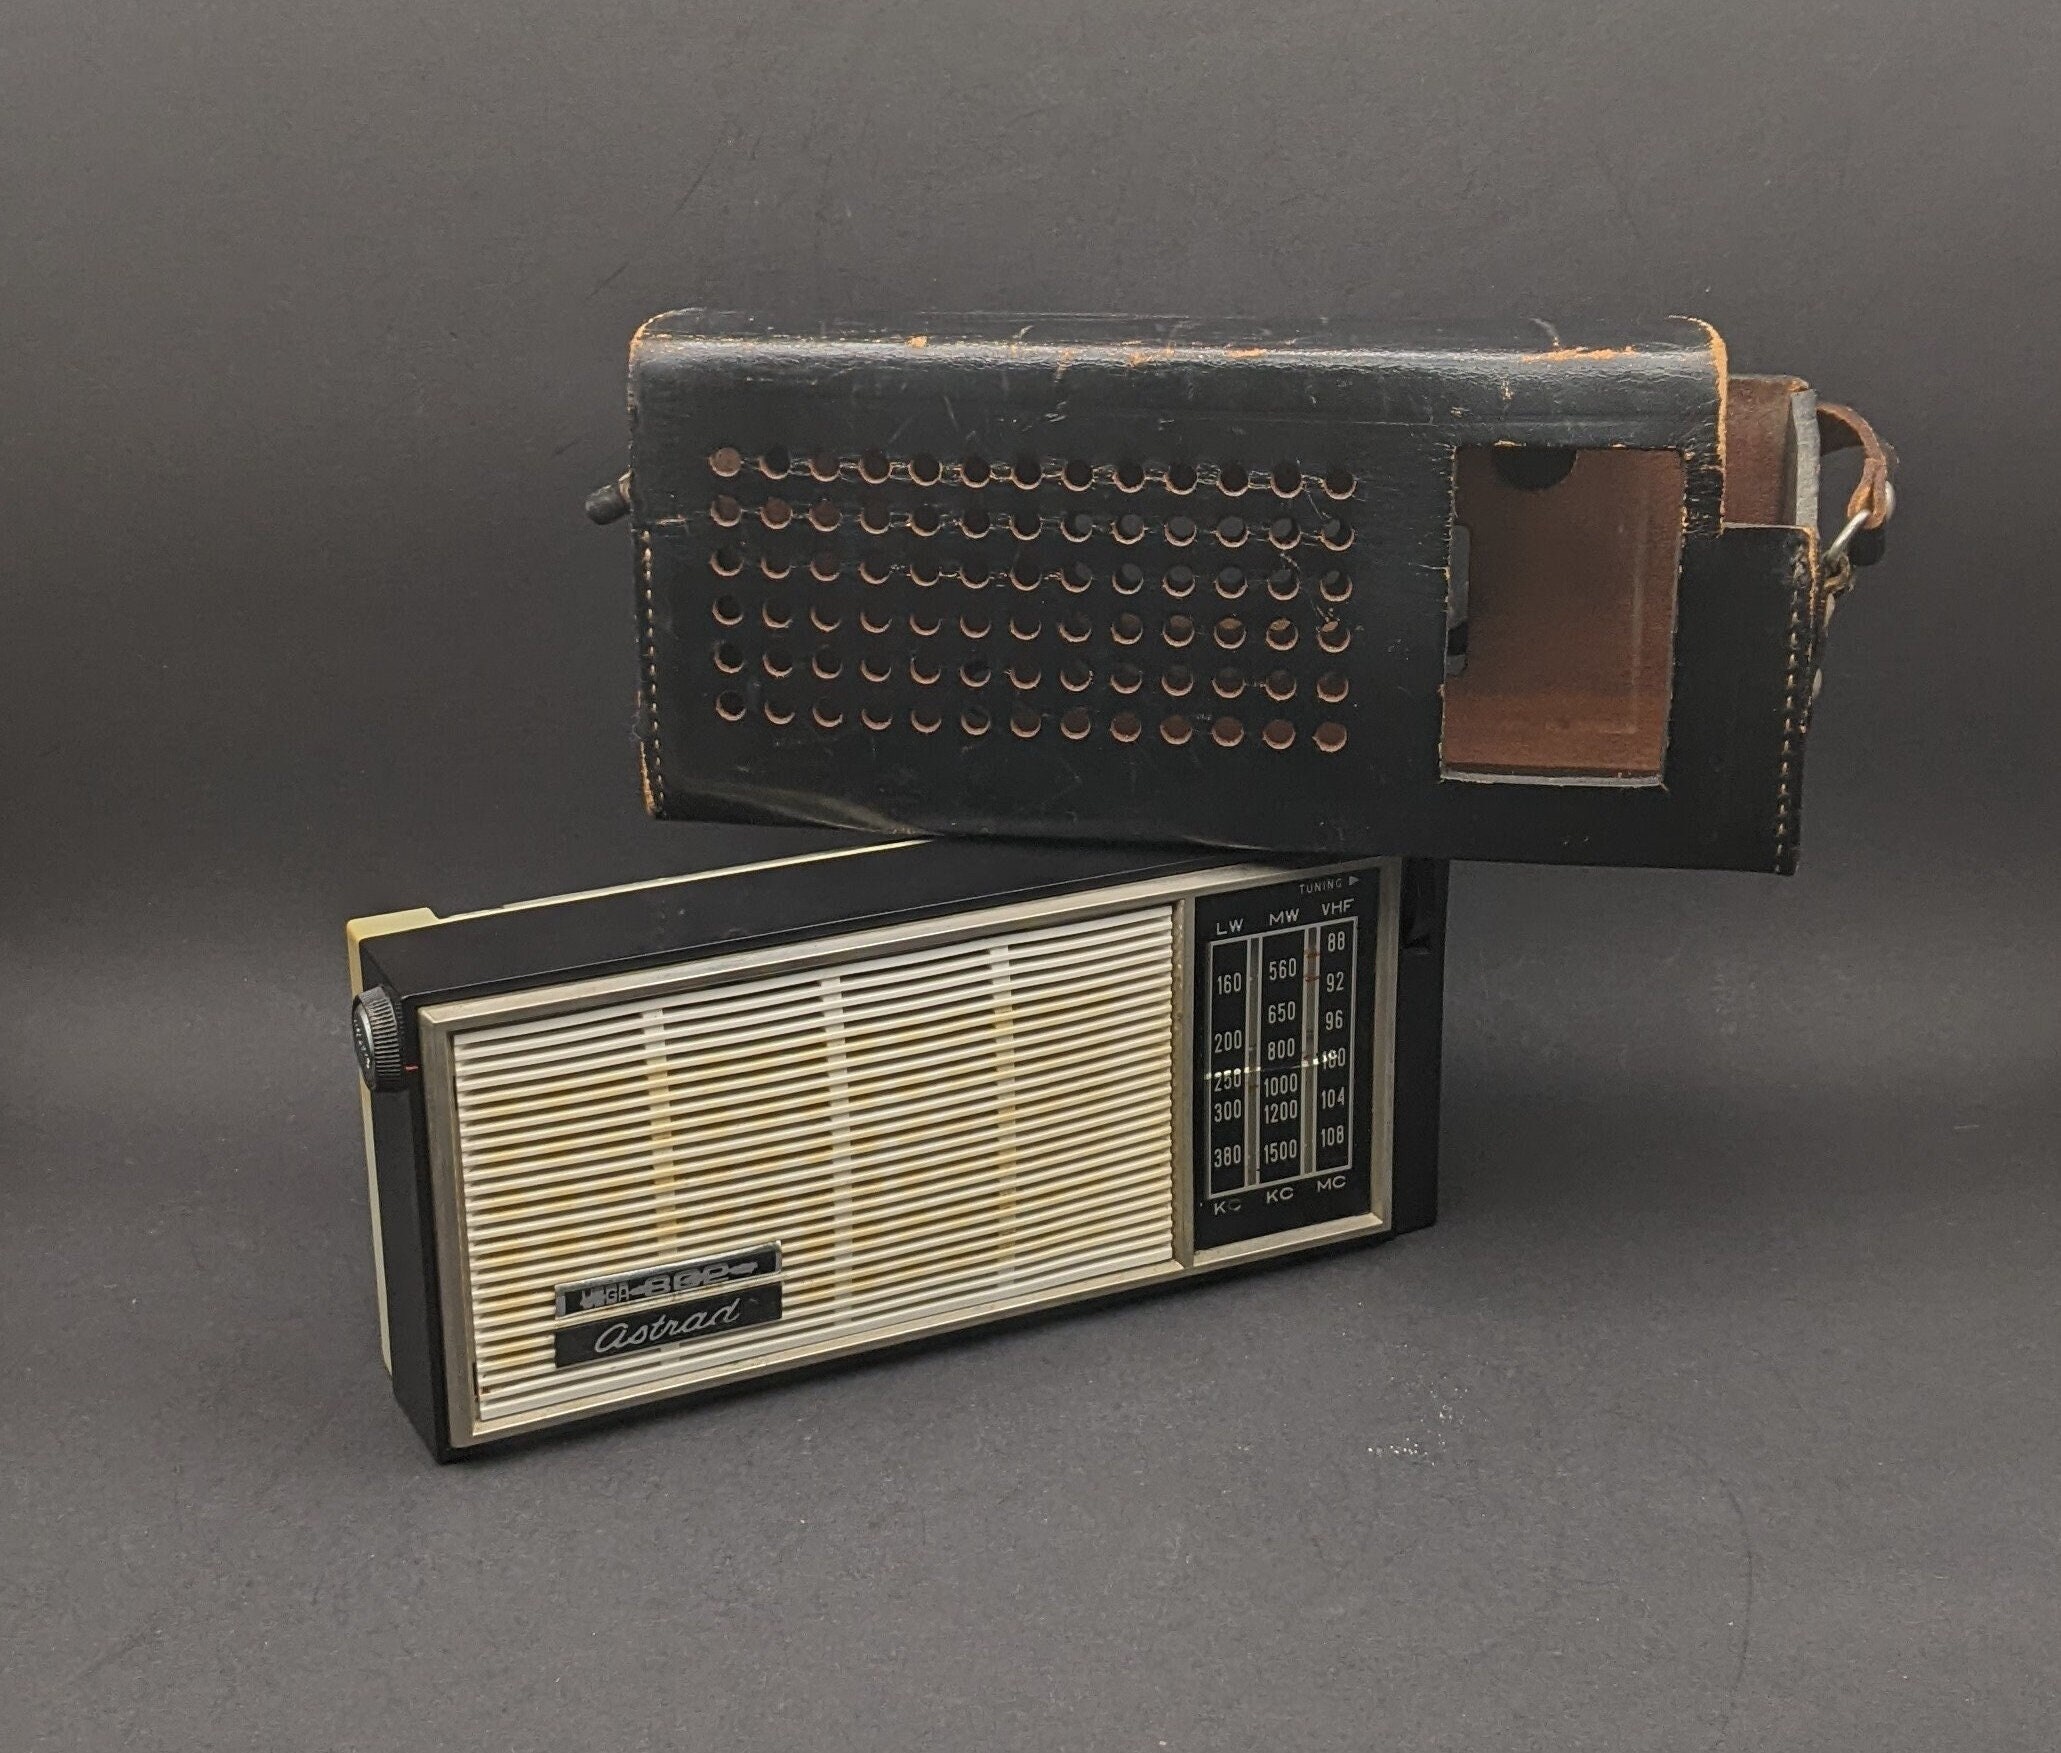 Retro Radio Vef-spīdola, Soviet Portable Radio, Radio Transistor, Vintage,  Old Radio, Collectible Radio, Stylish Design, Retro Decor, Rarity 